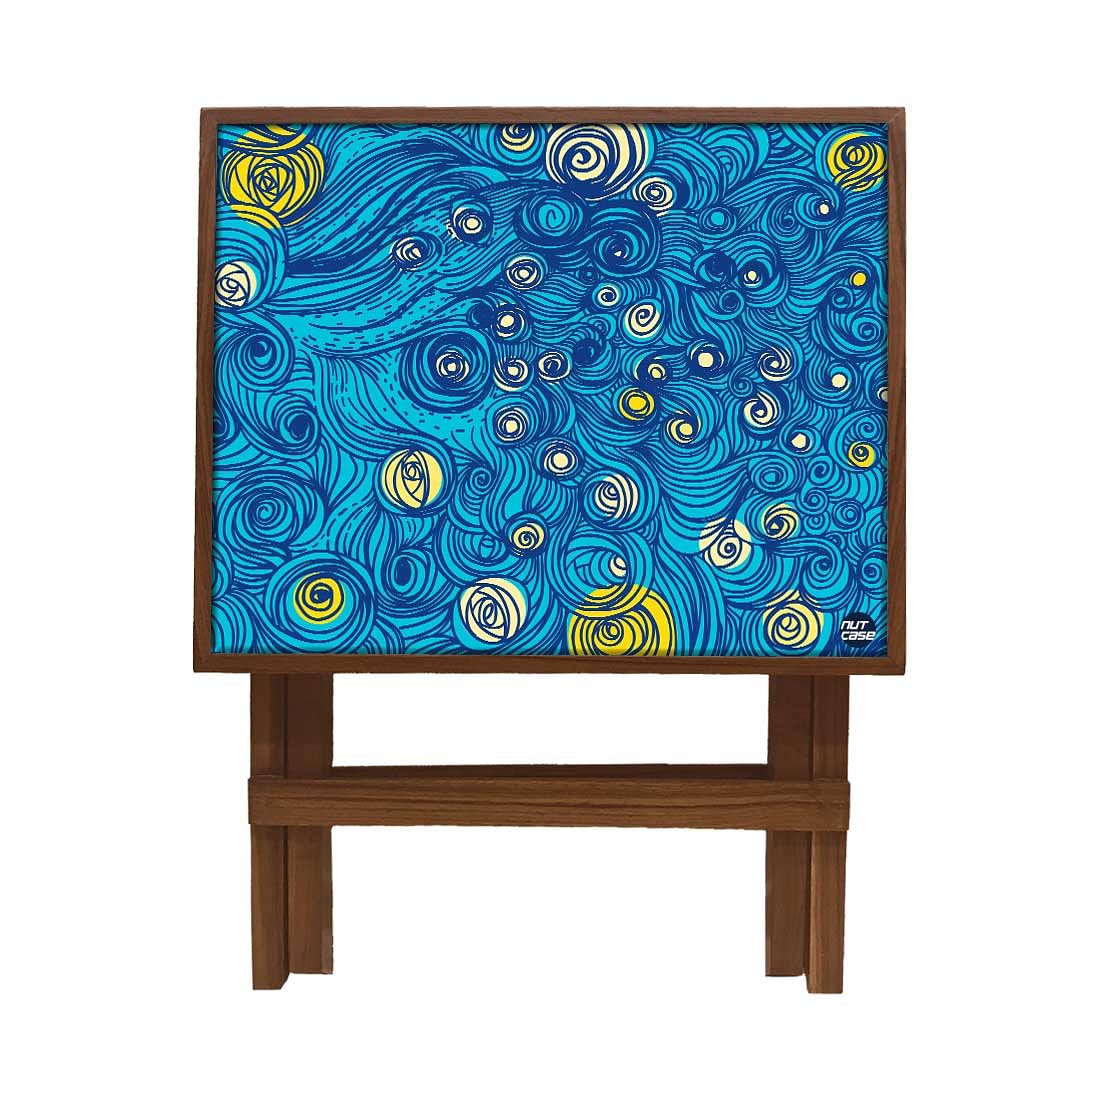 Folding Side Table - Teak Wood - Starry Night Nutcase